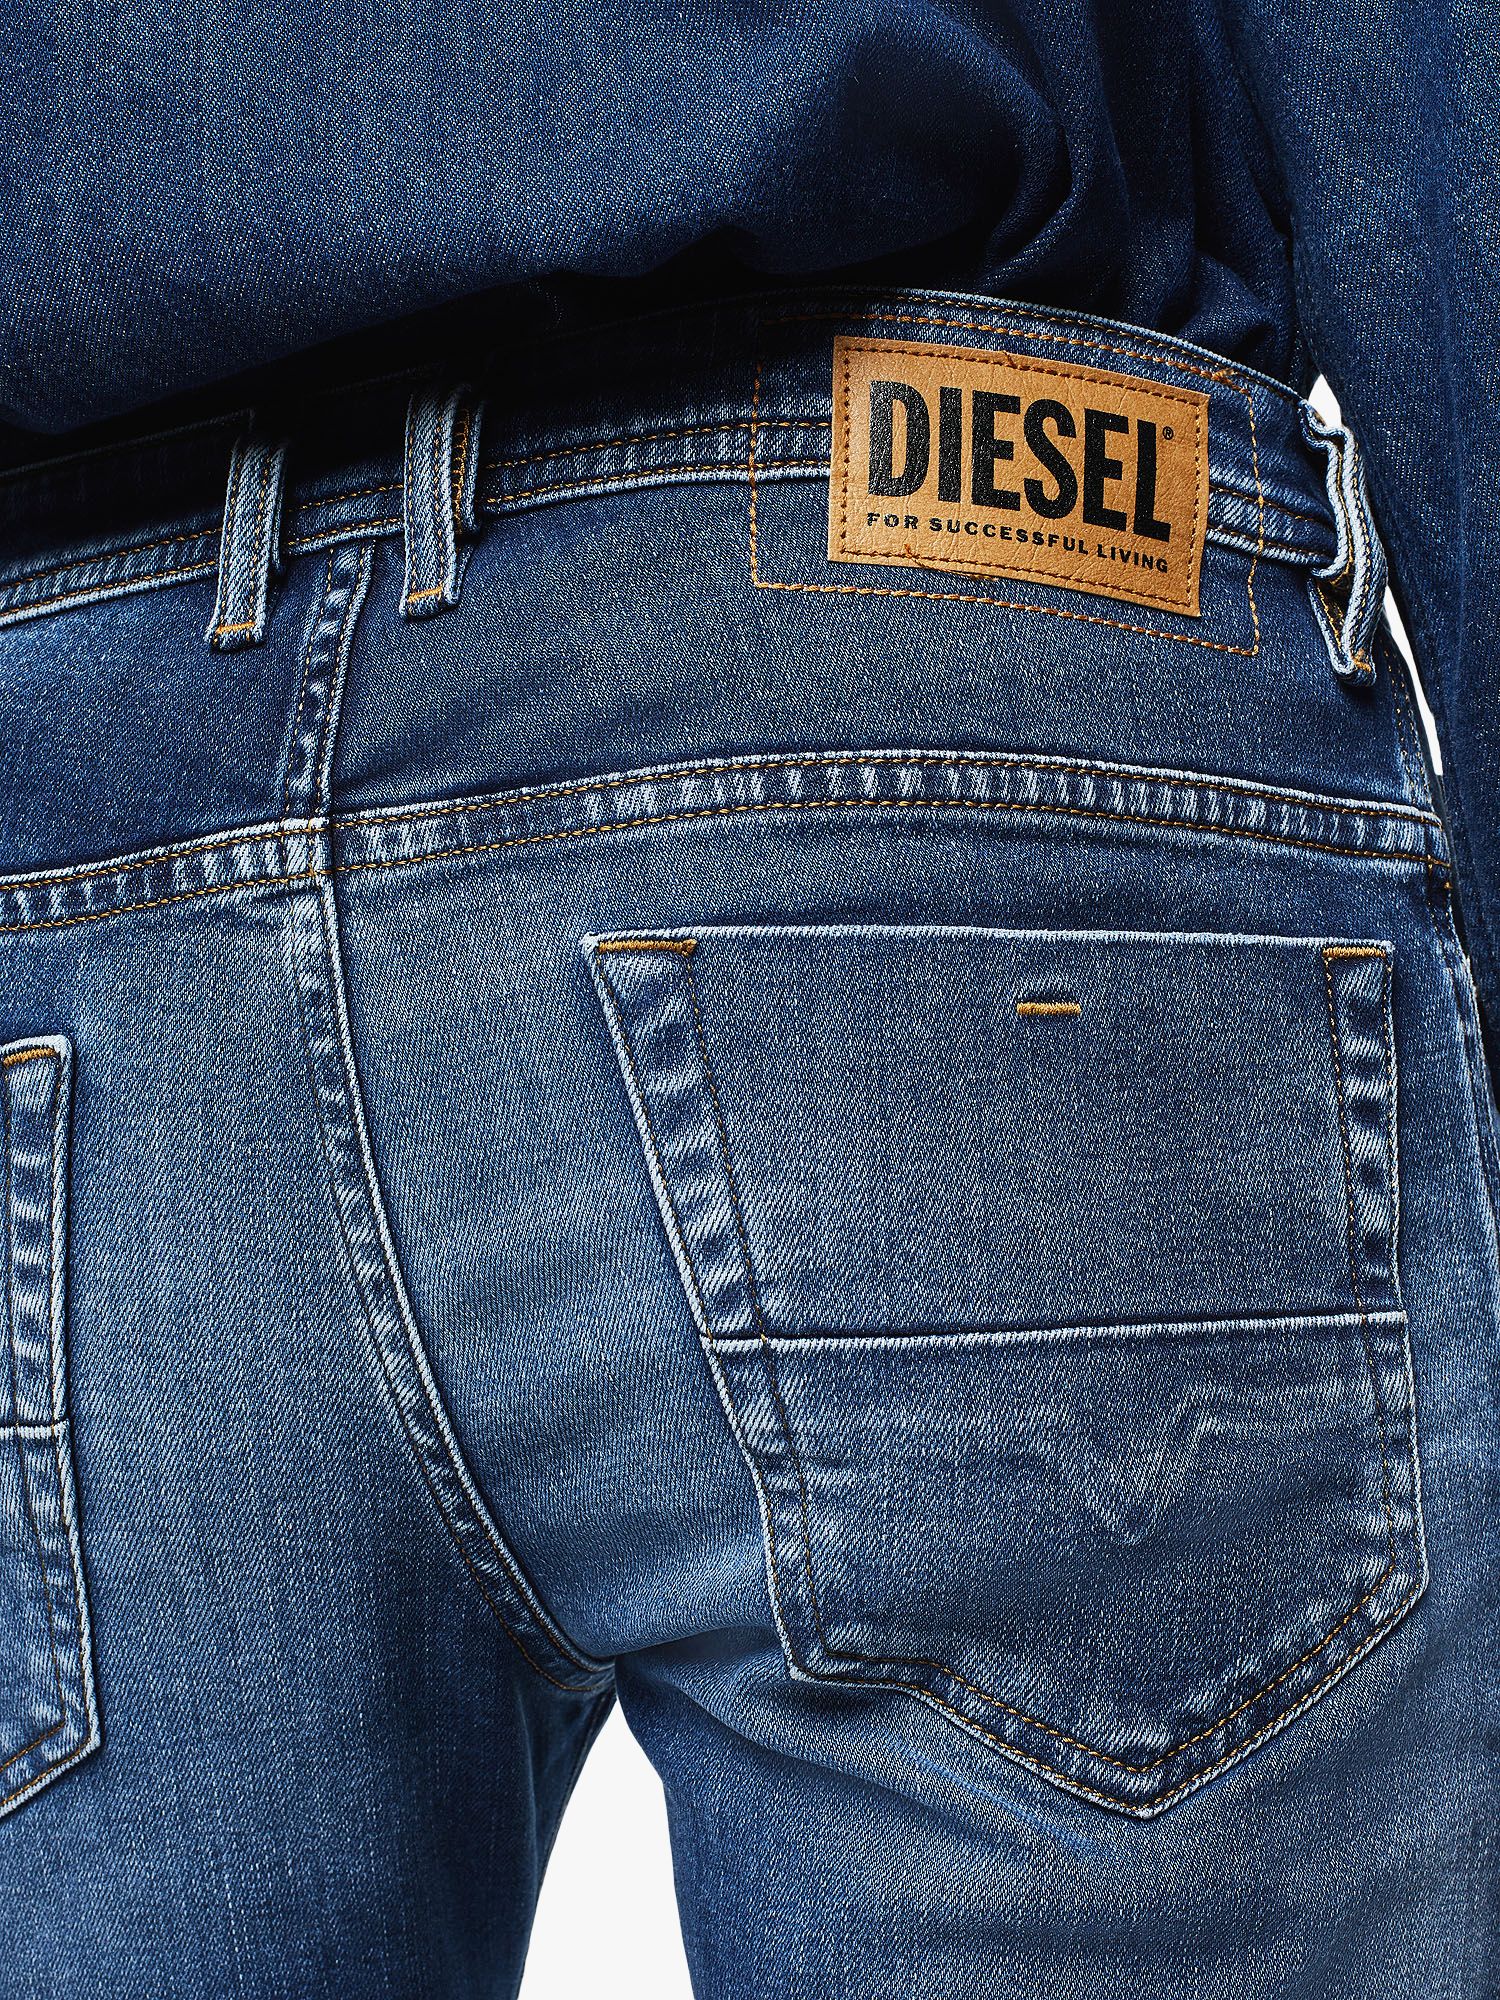 Diesel Thommer Slim Fit Jeans, Blue at John Lewis & Partners